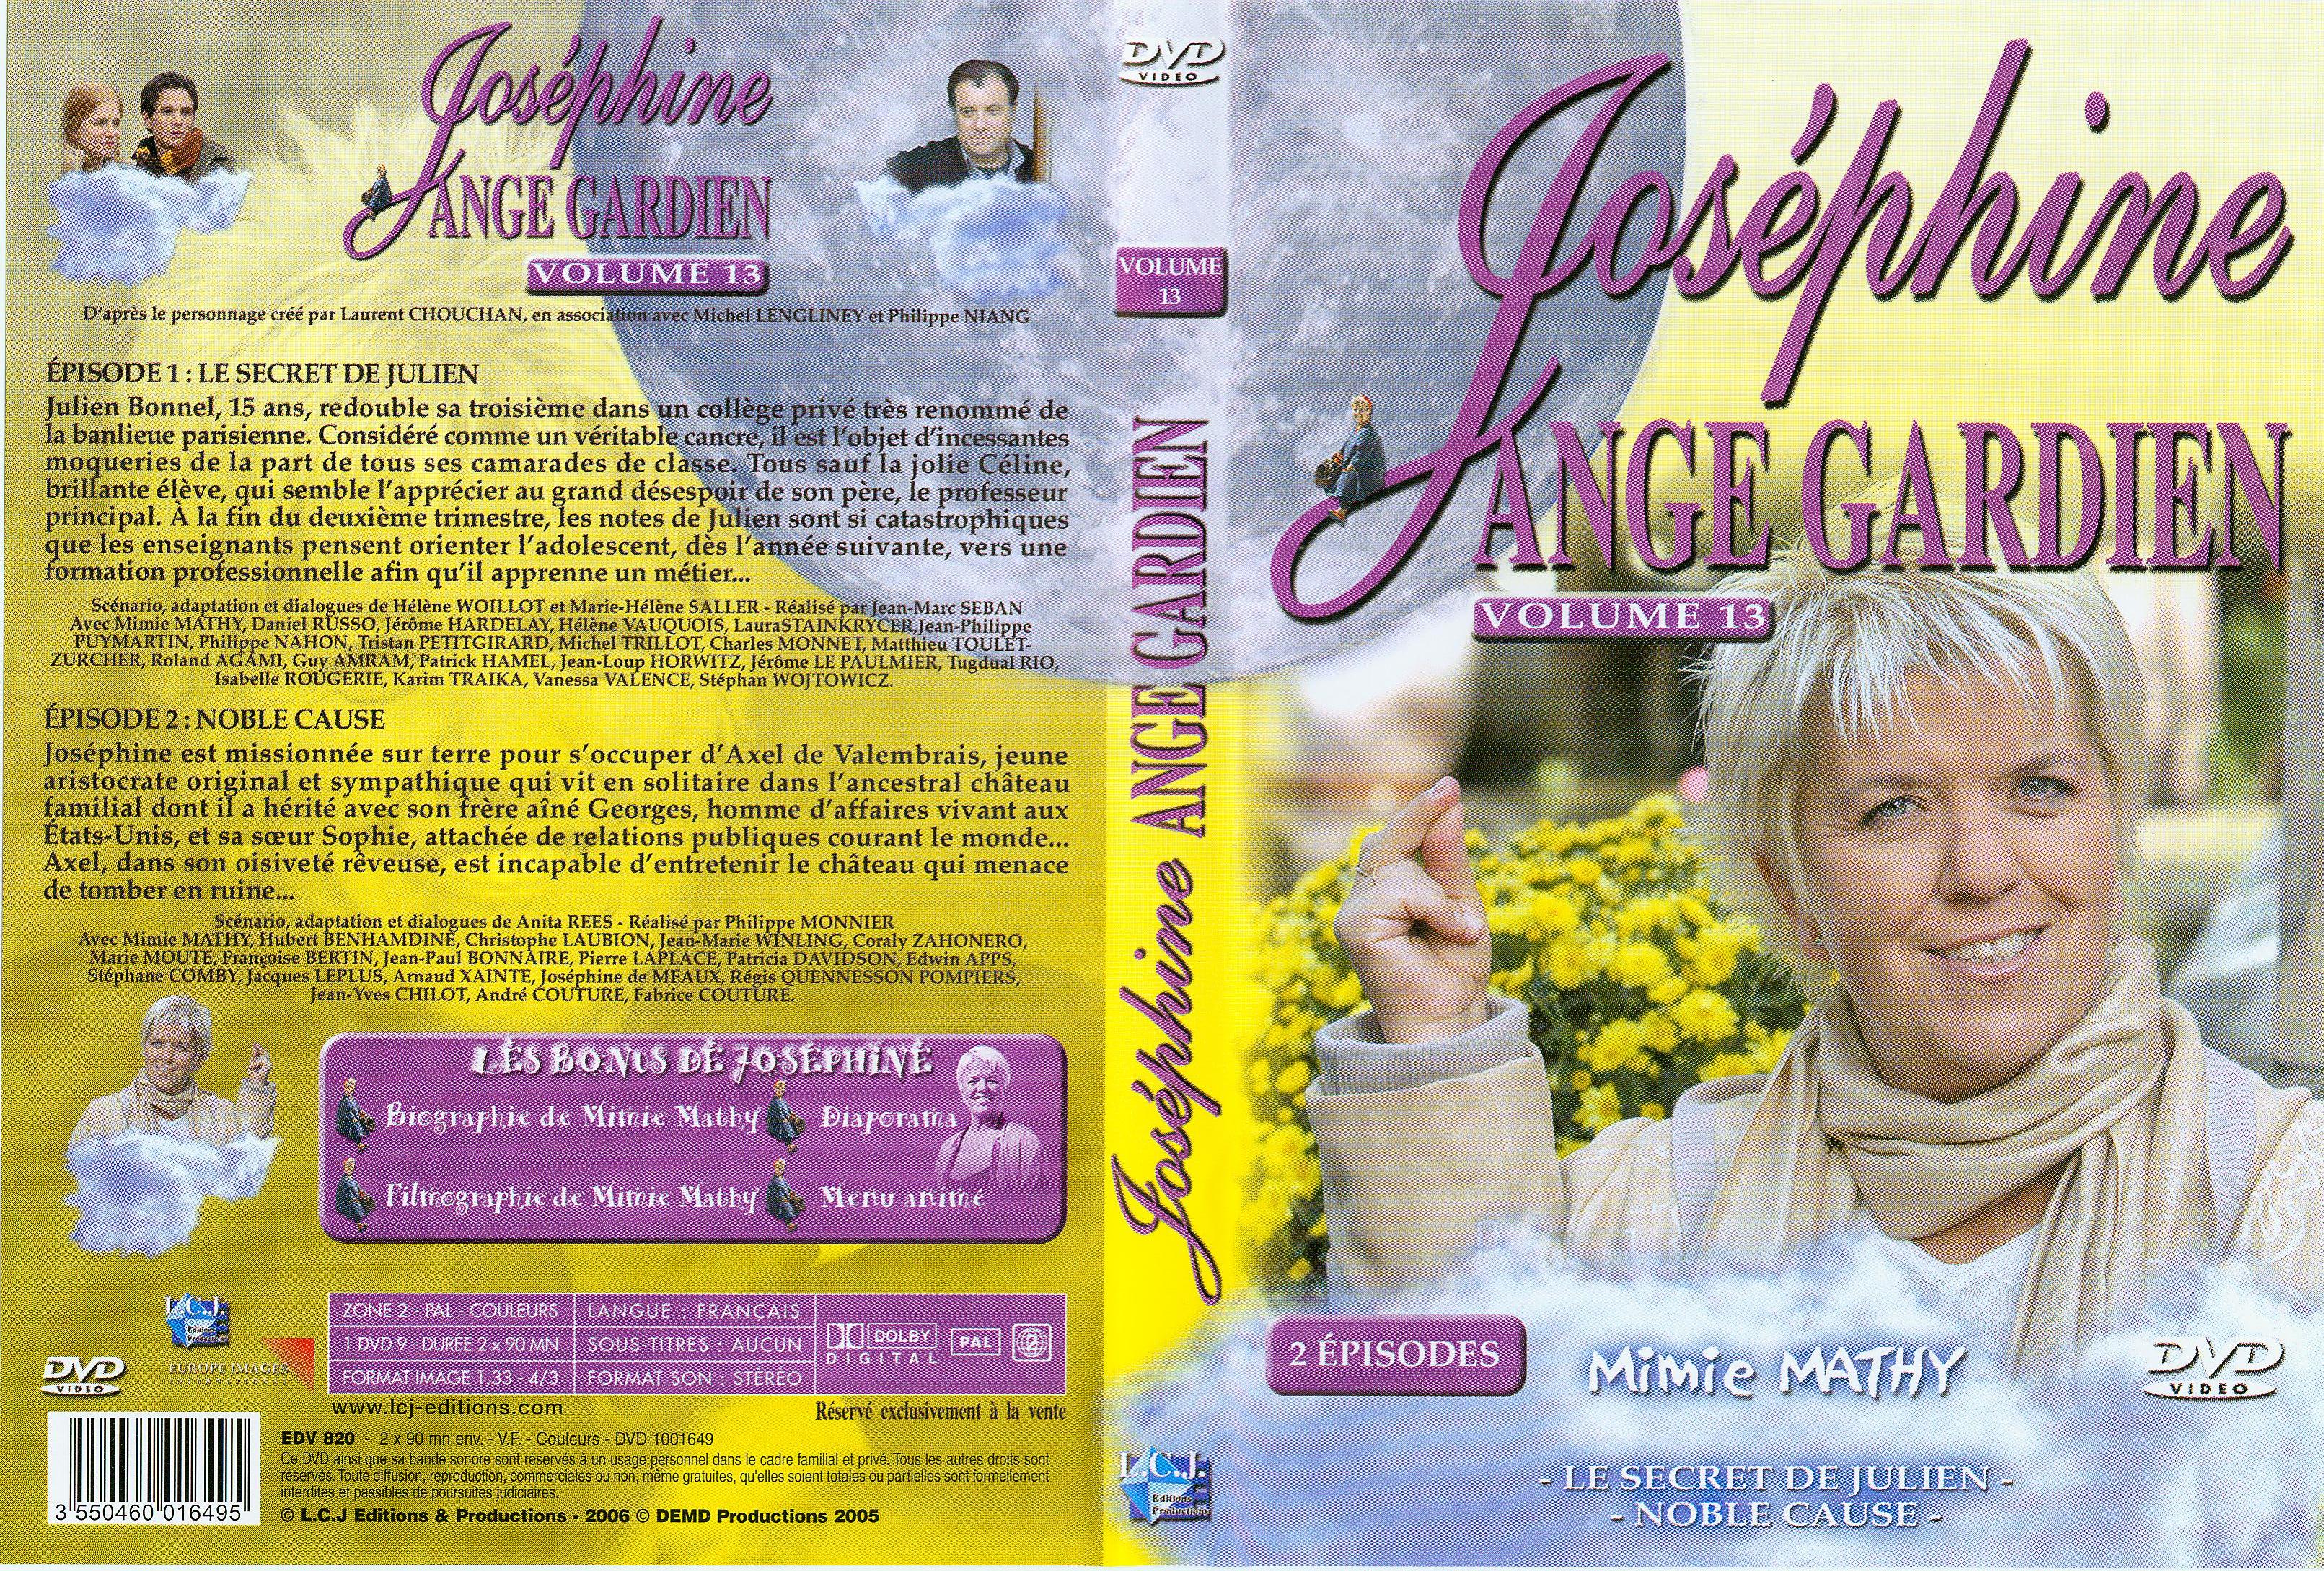 Jaquette DVD Josephine ange gardien vol 13 v2